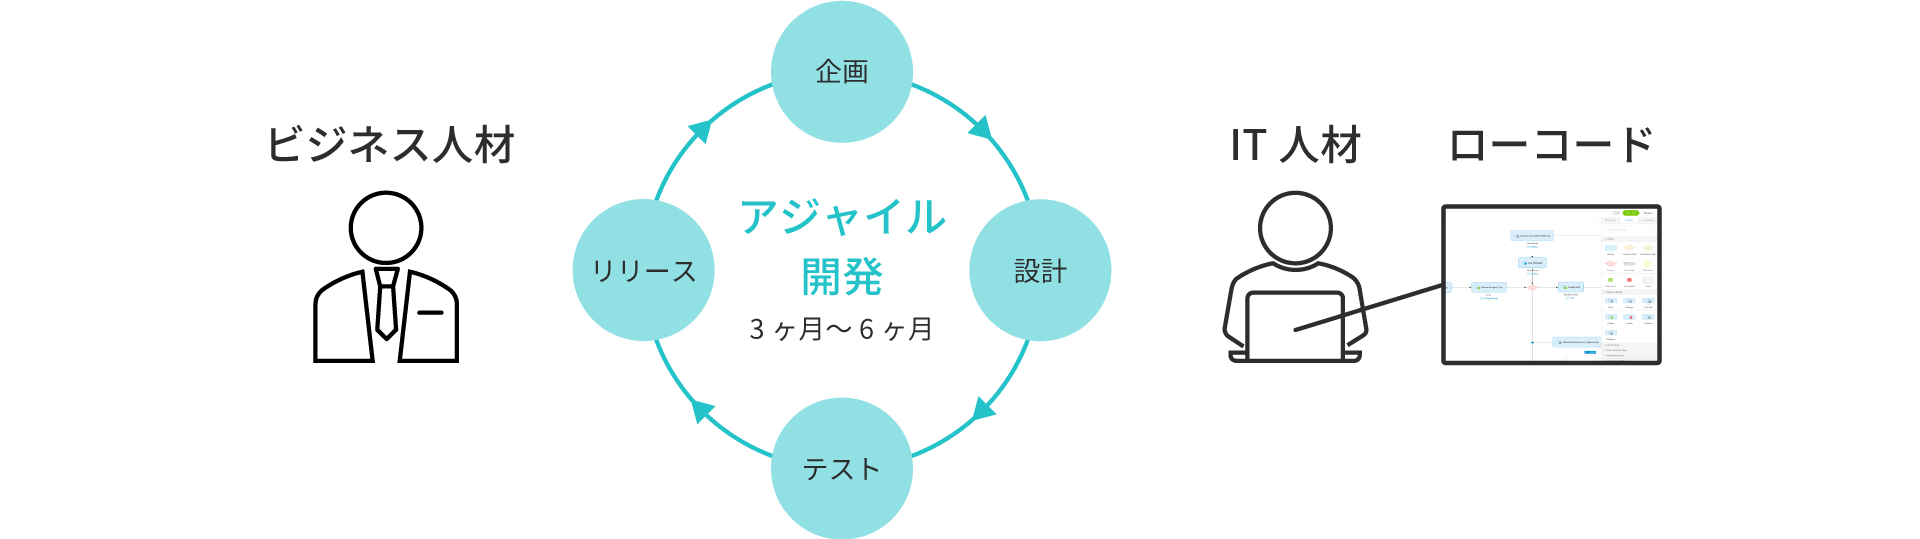 Agile development diagram